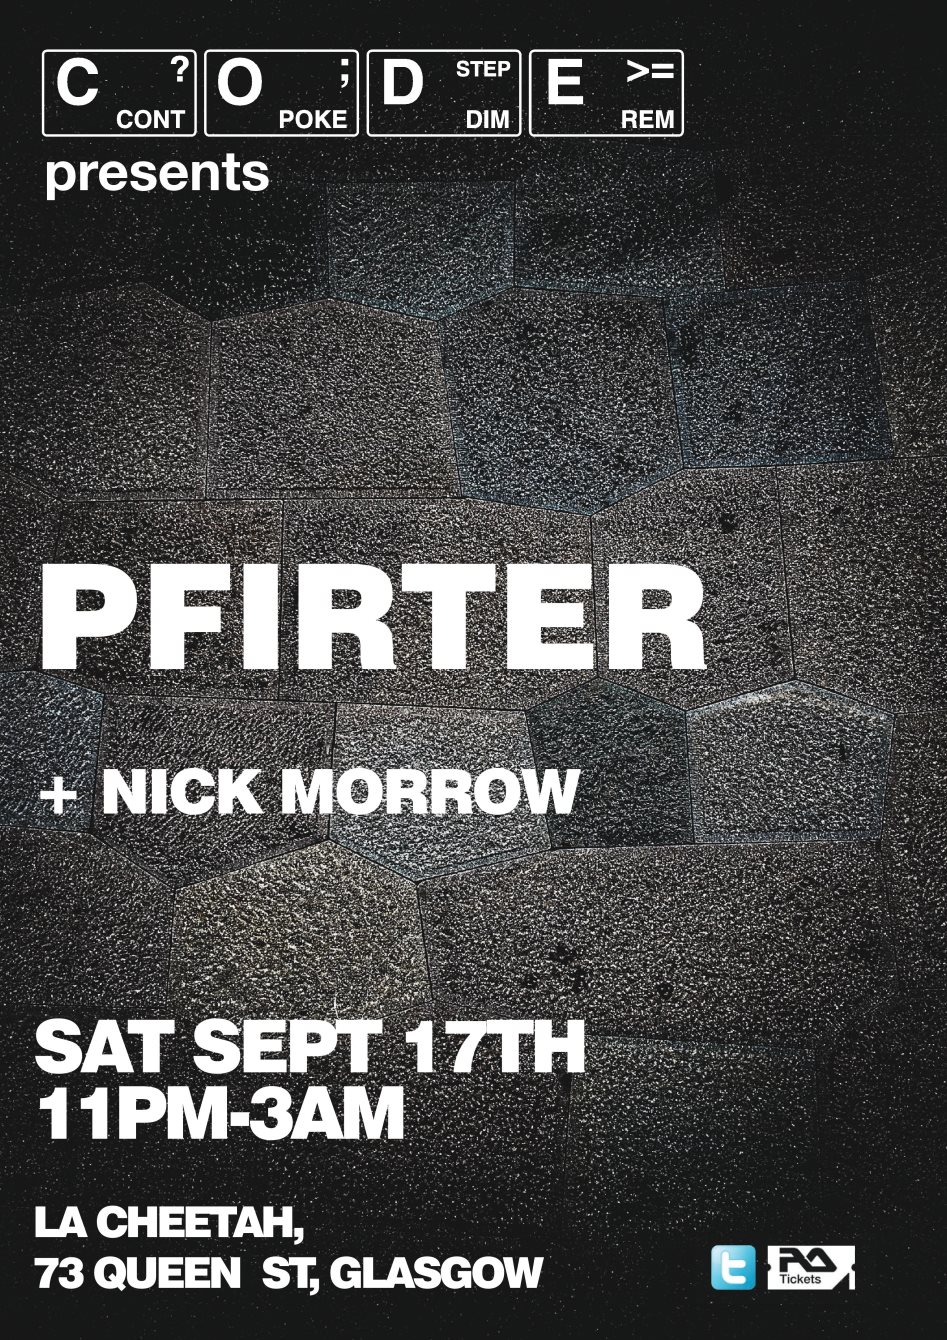 Code presents Pfirter - Flyer front